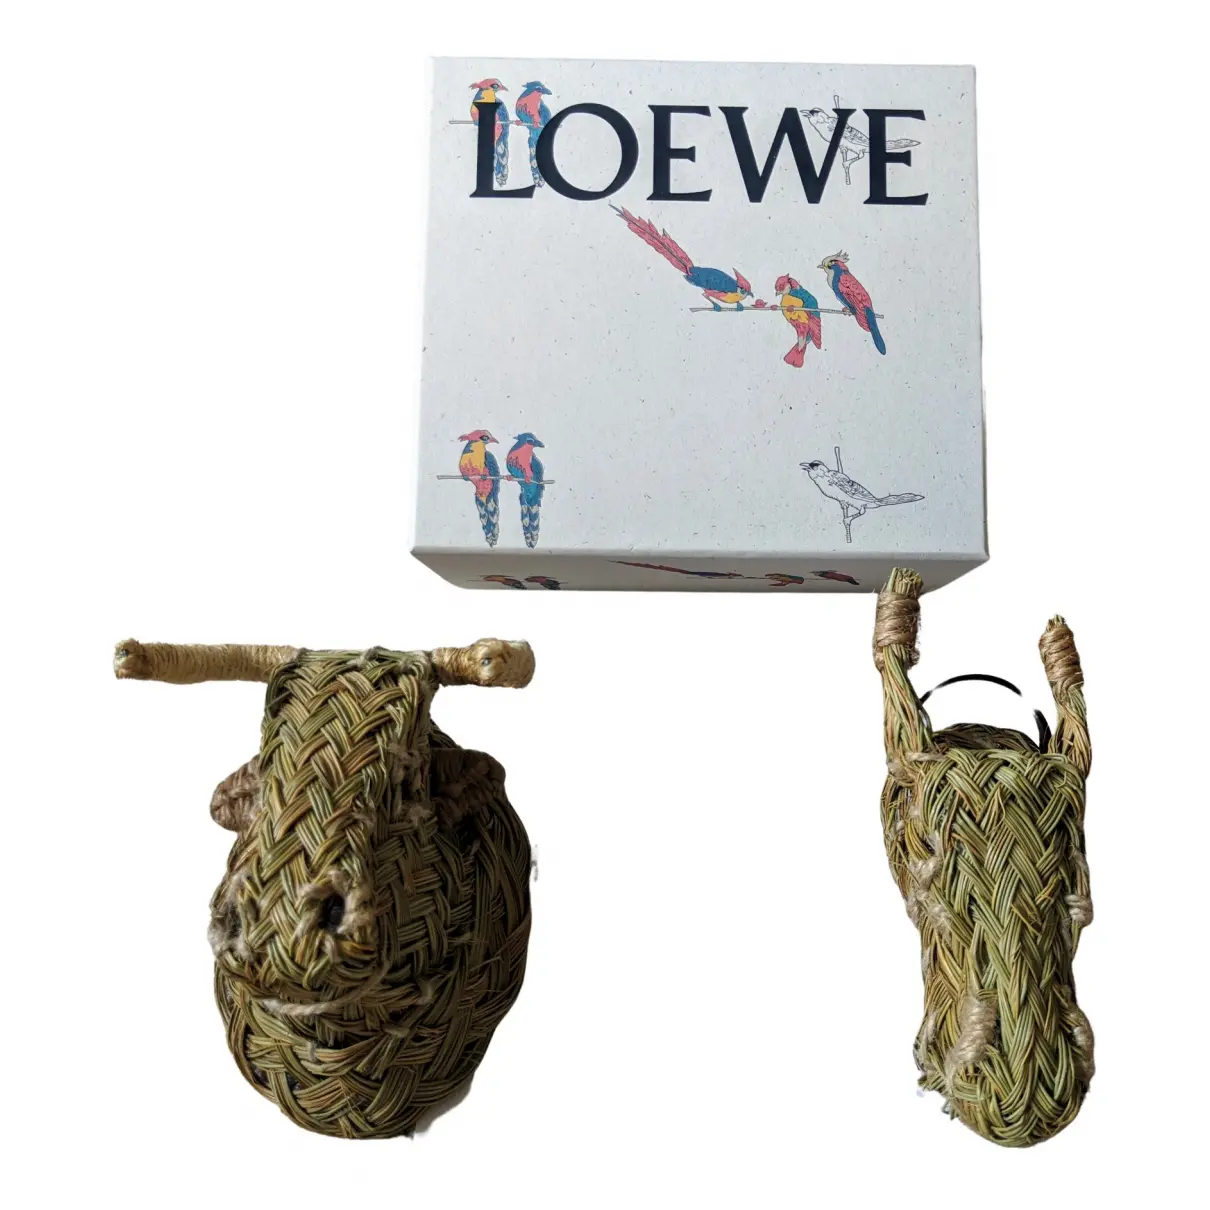 Buy Loewe Home decor online